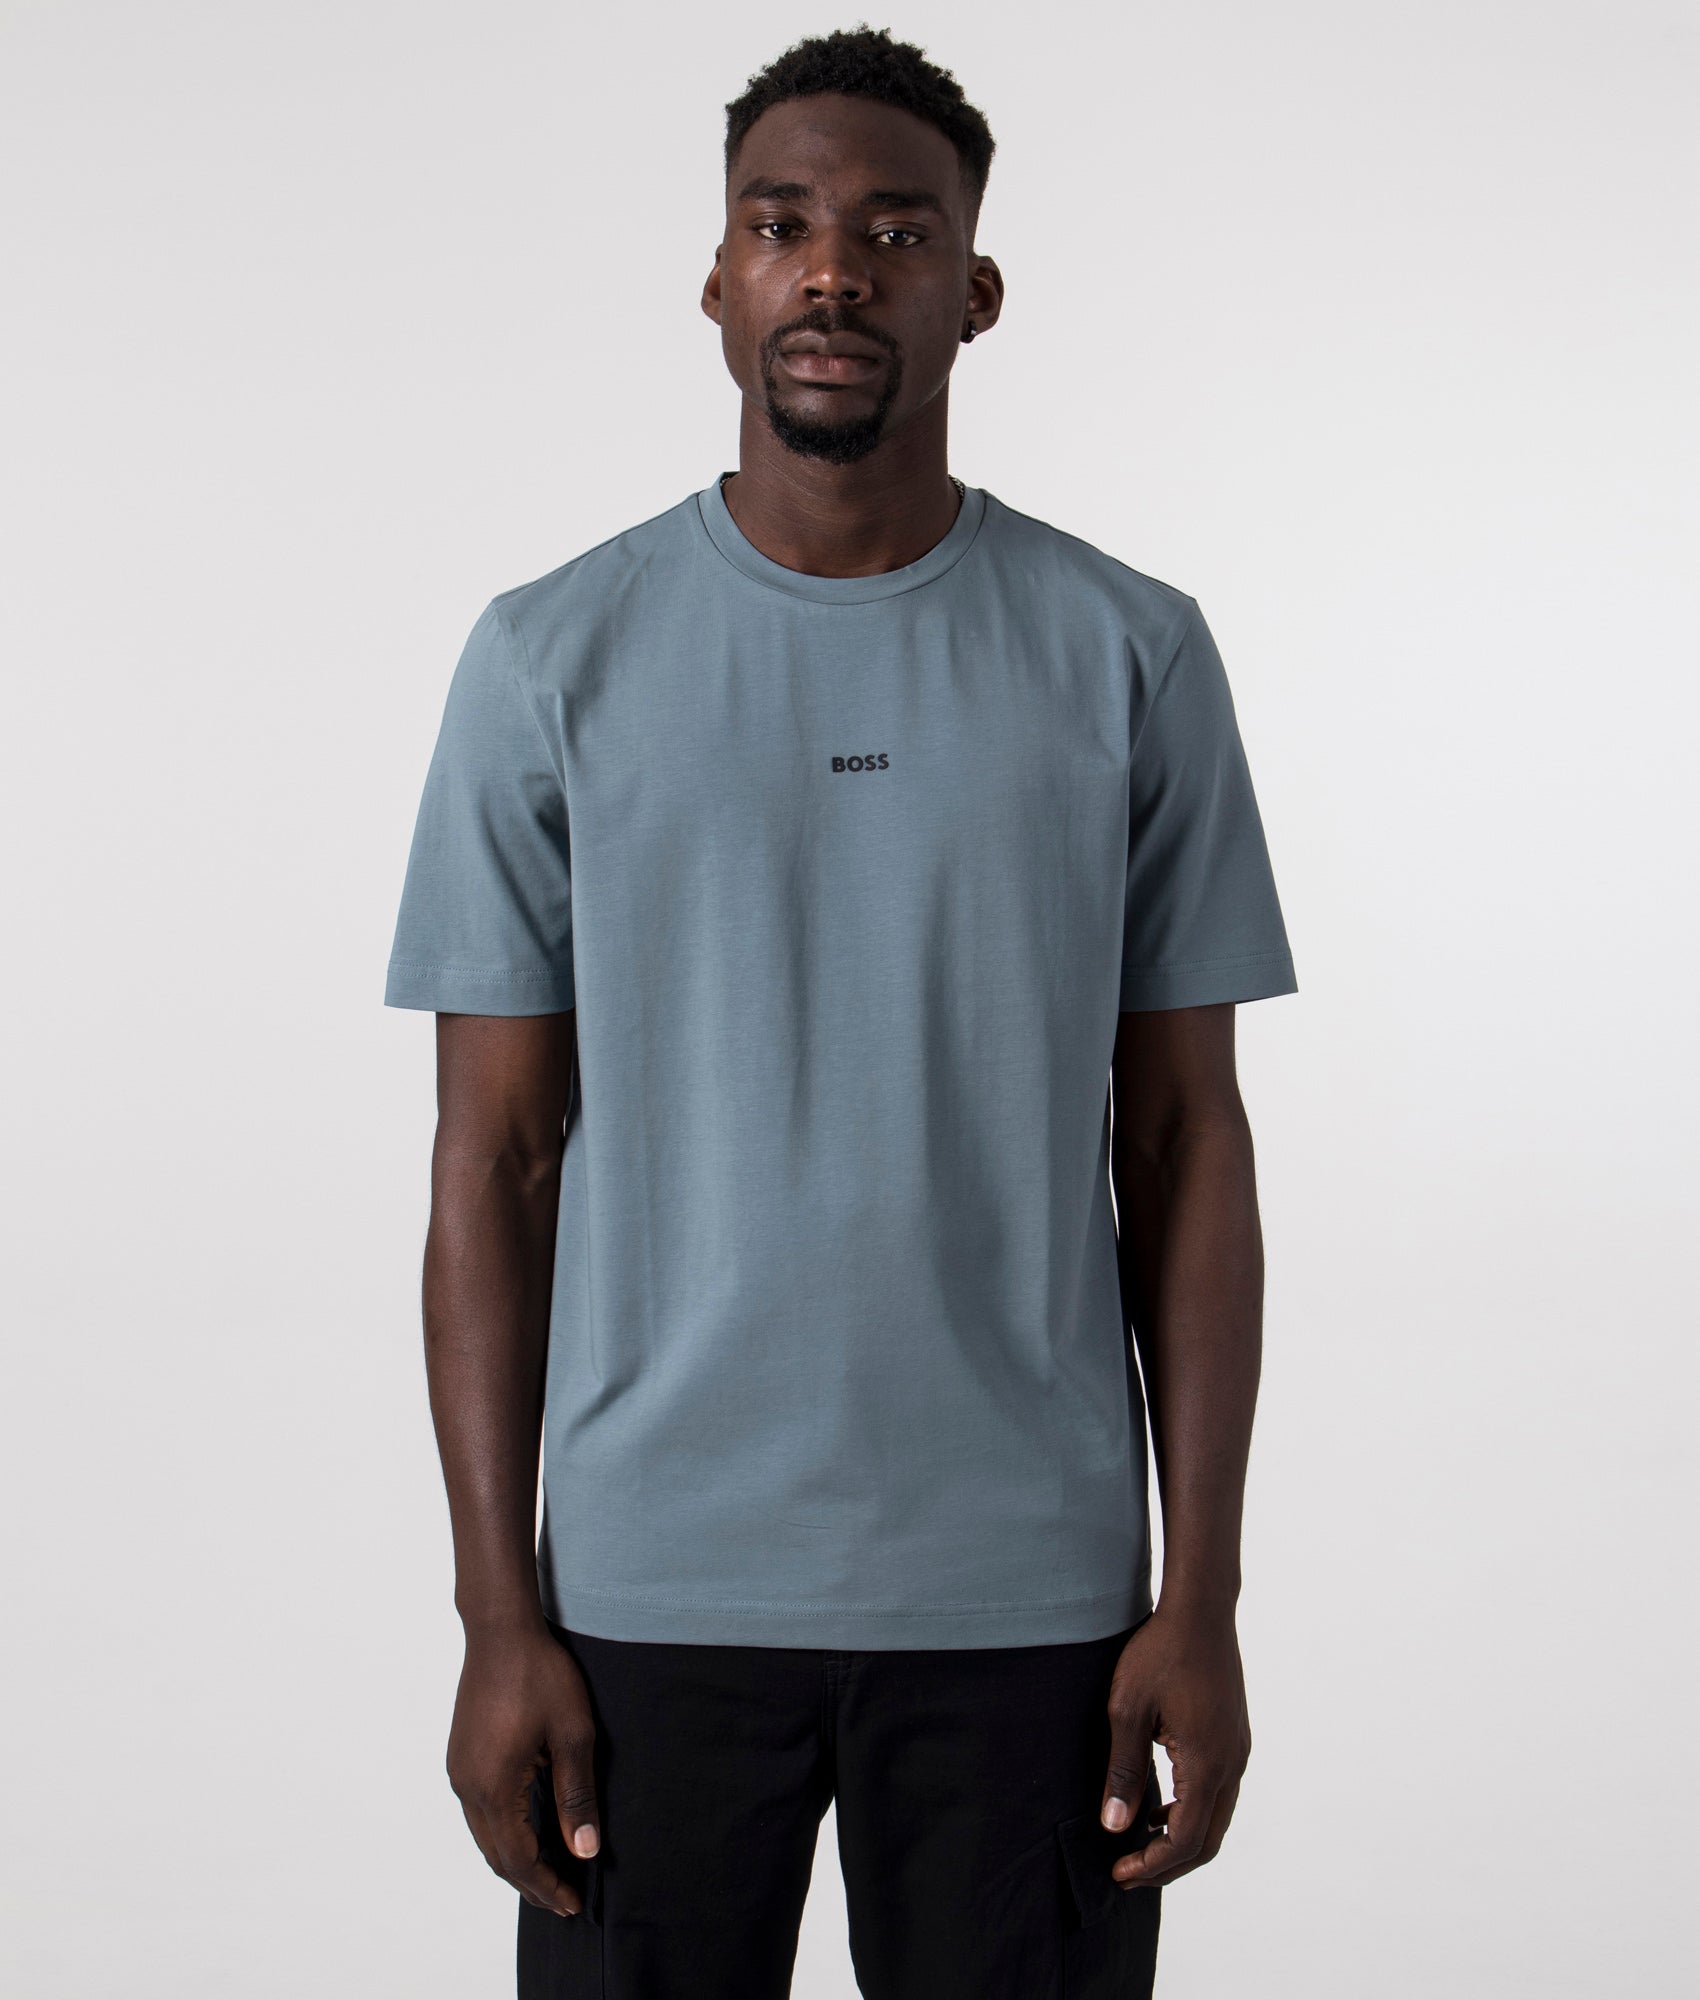 BOSS Mens Relaxed Fit Tchup T-Shirt - Colour: 375 Open Green - Size: XL